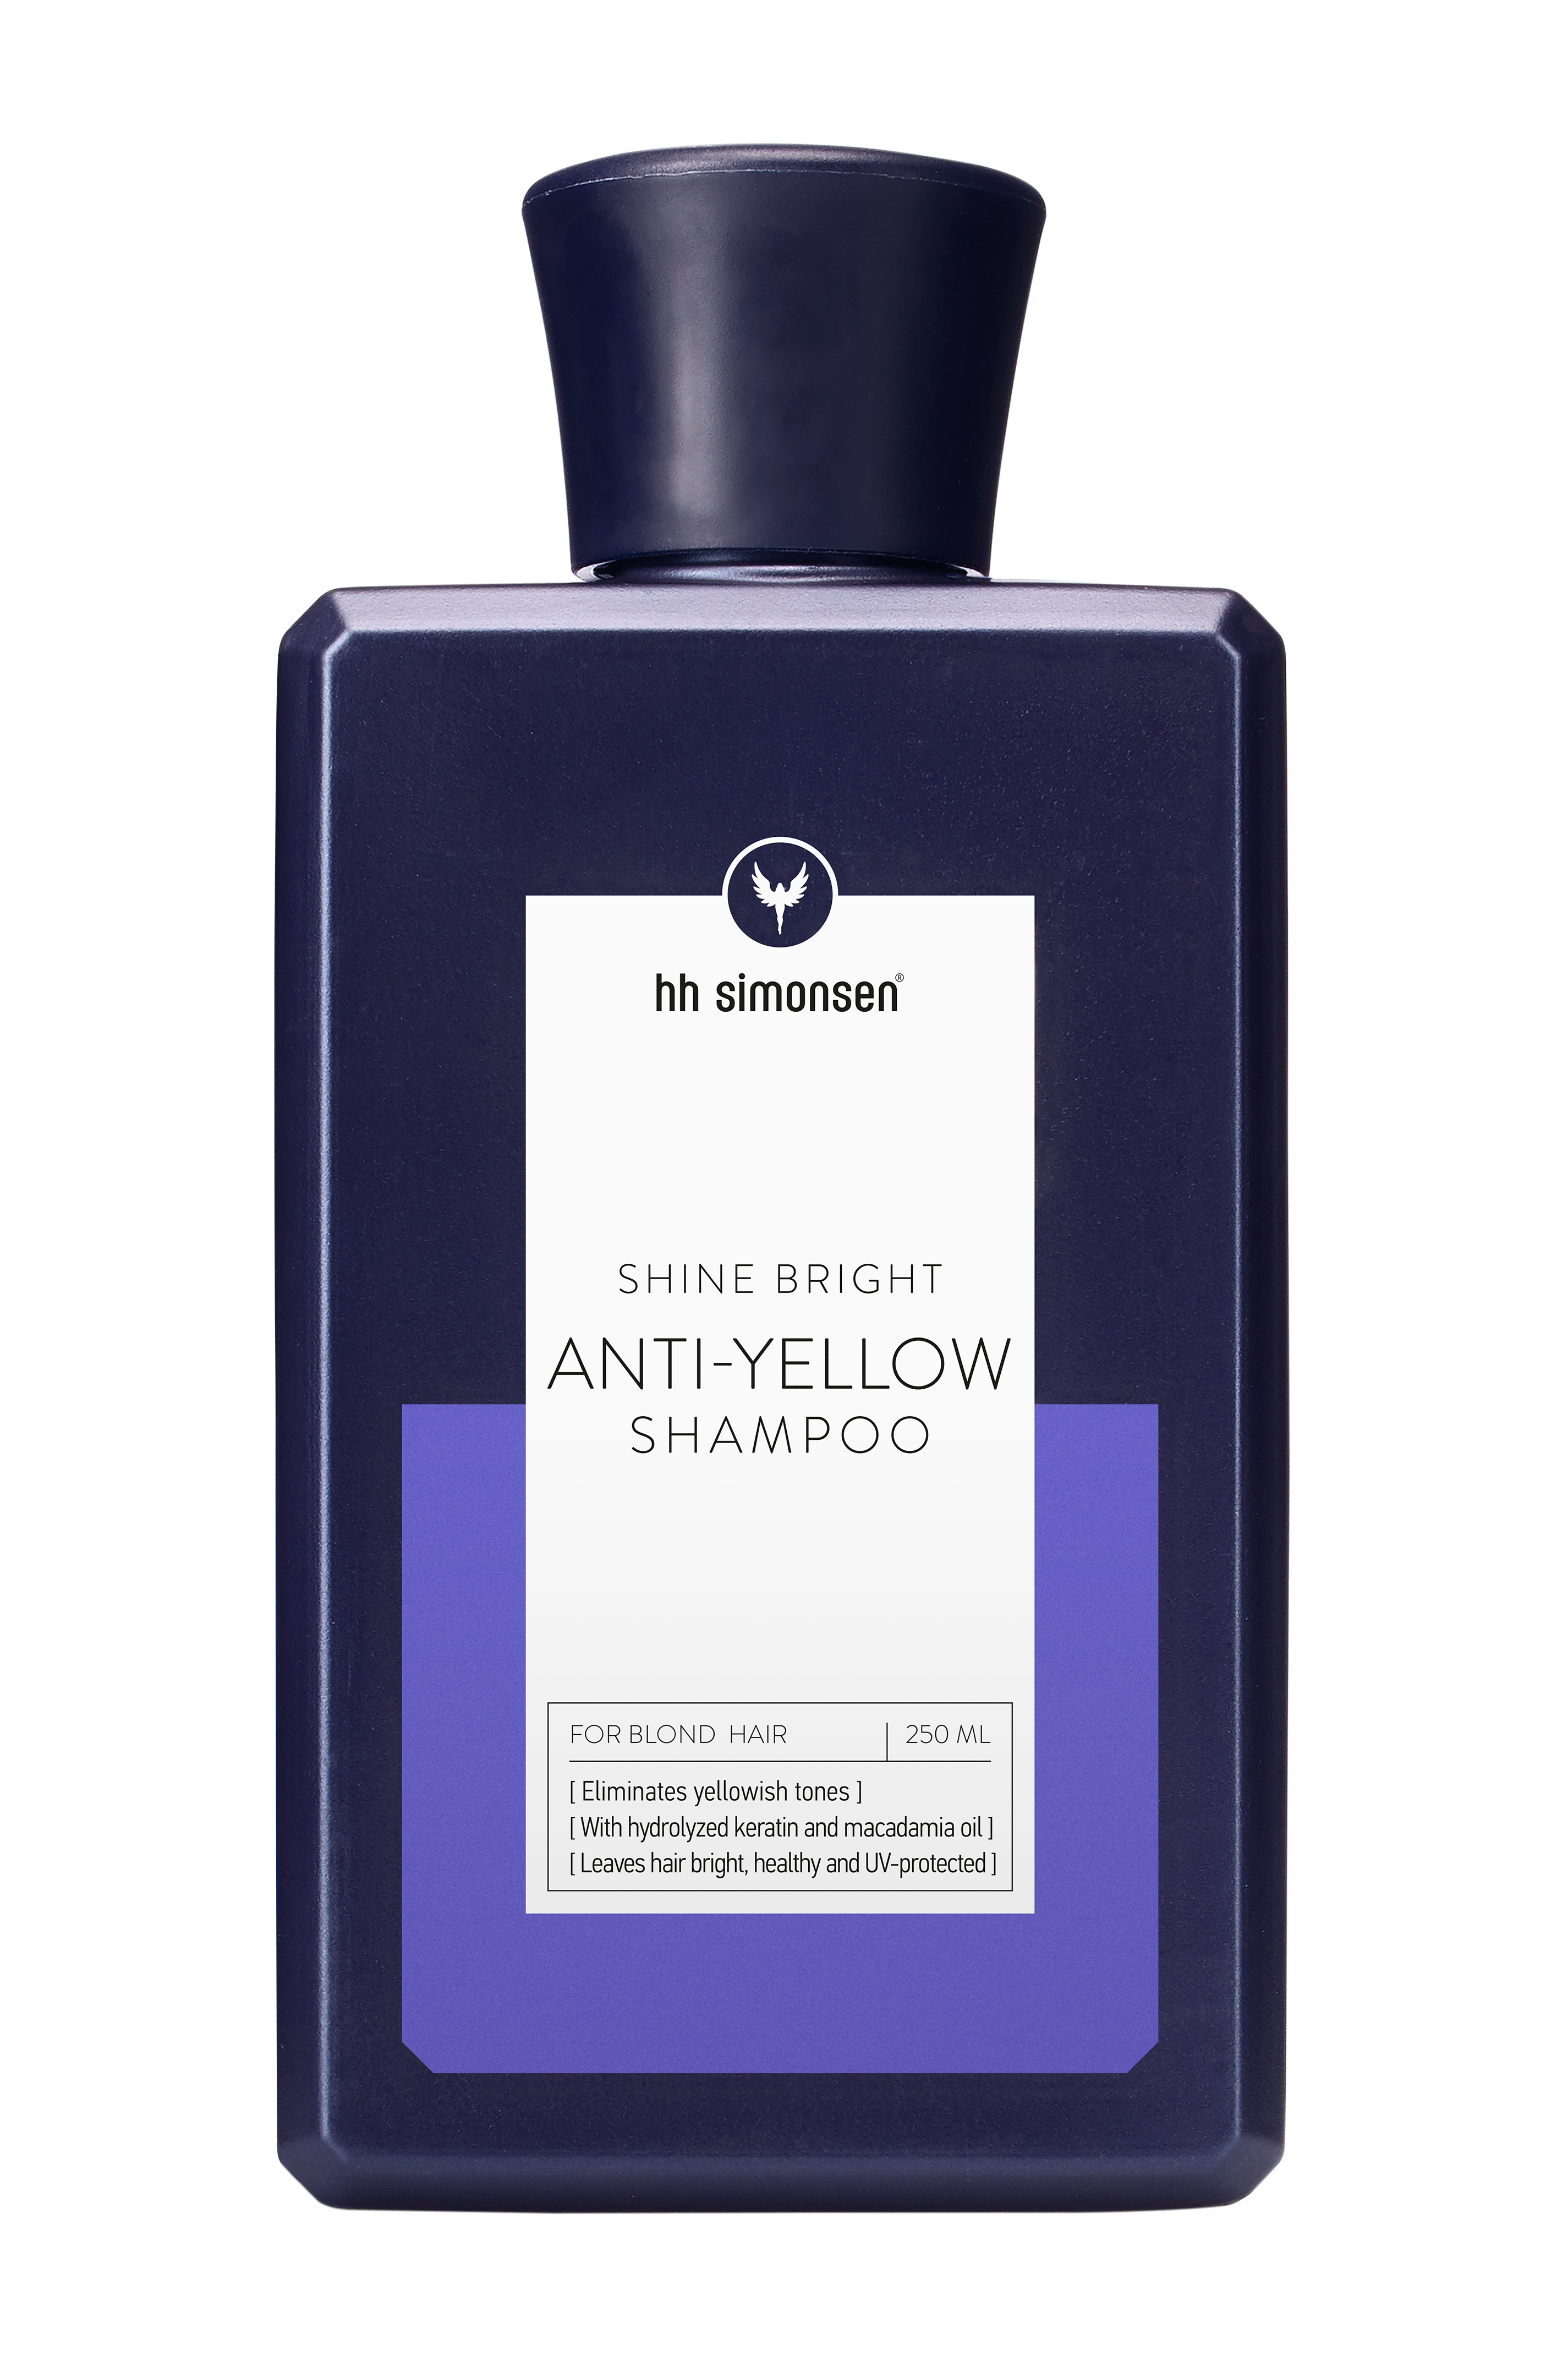 HH Simonsen Anti-Yellow Shampoo, 250 ml.